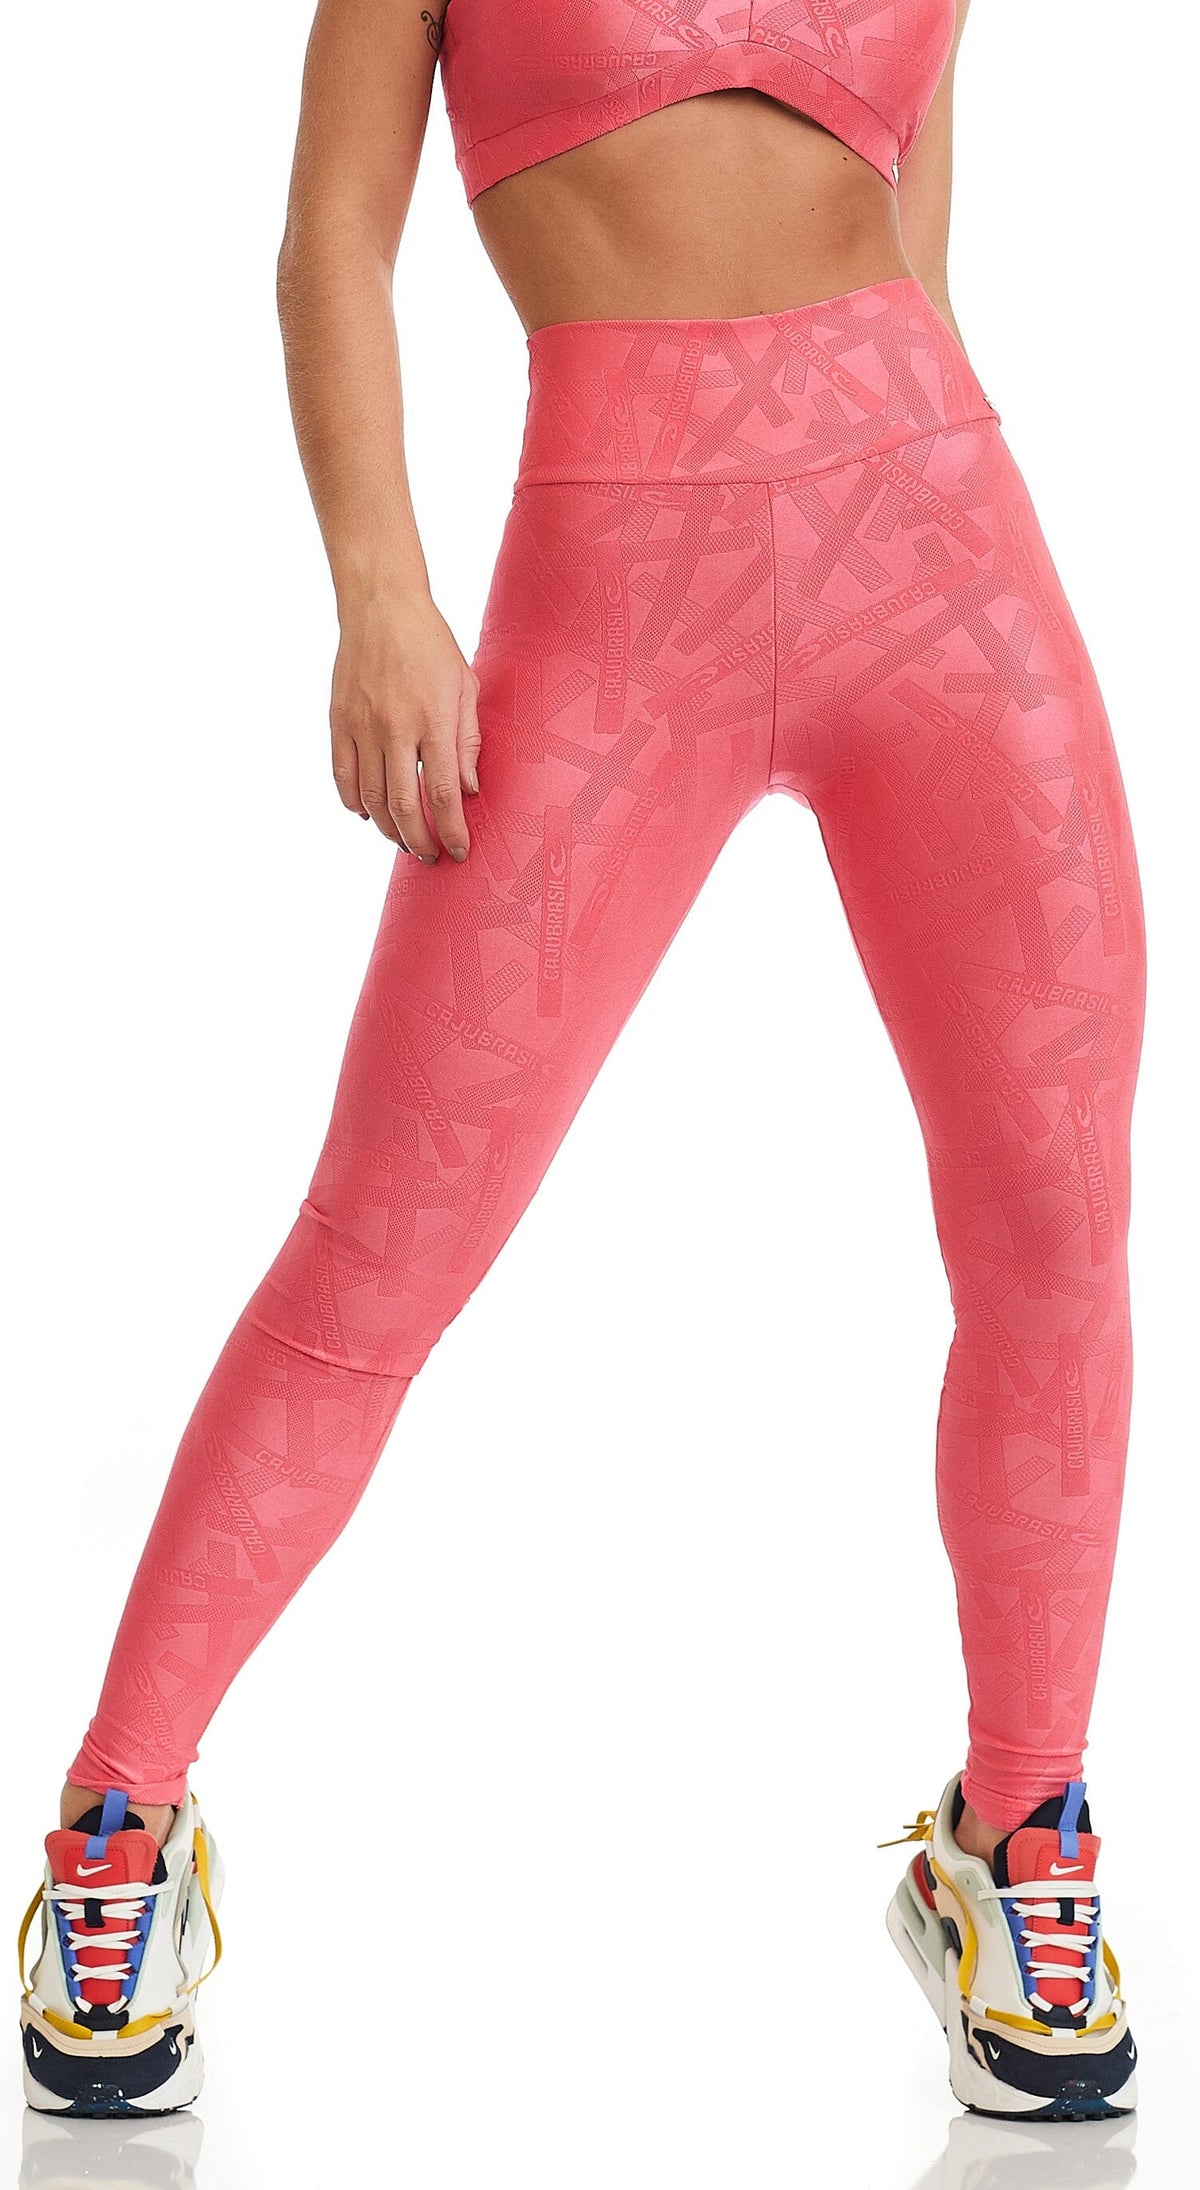 Legging Exclusive - Neon Pink